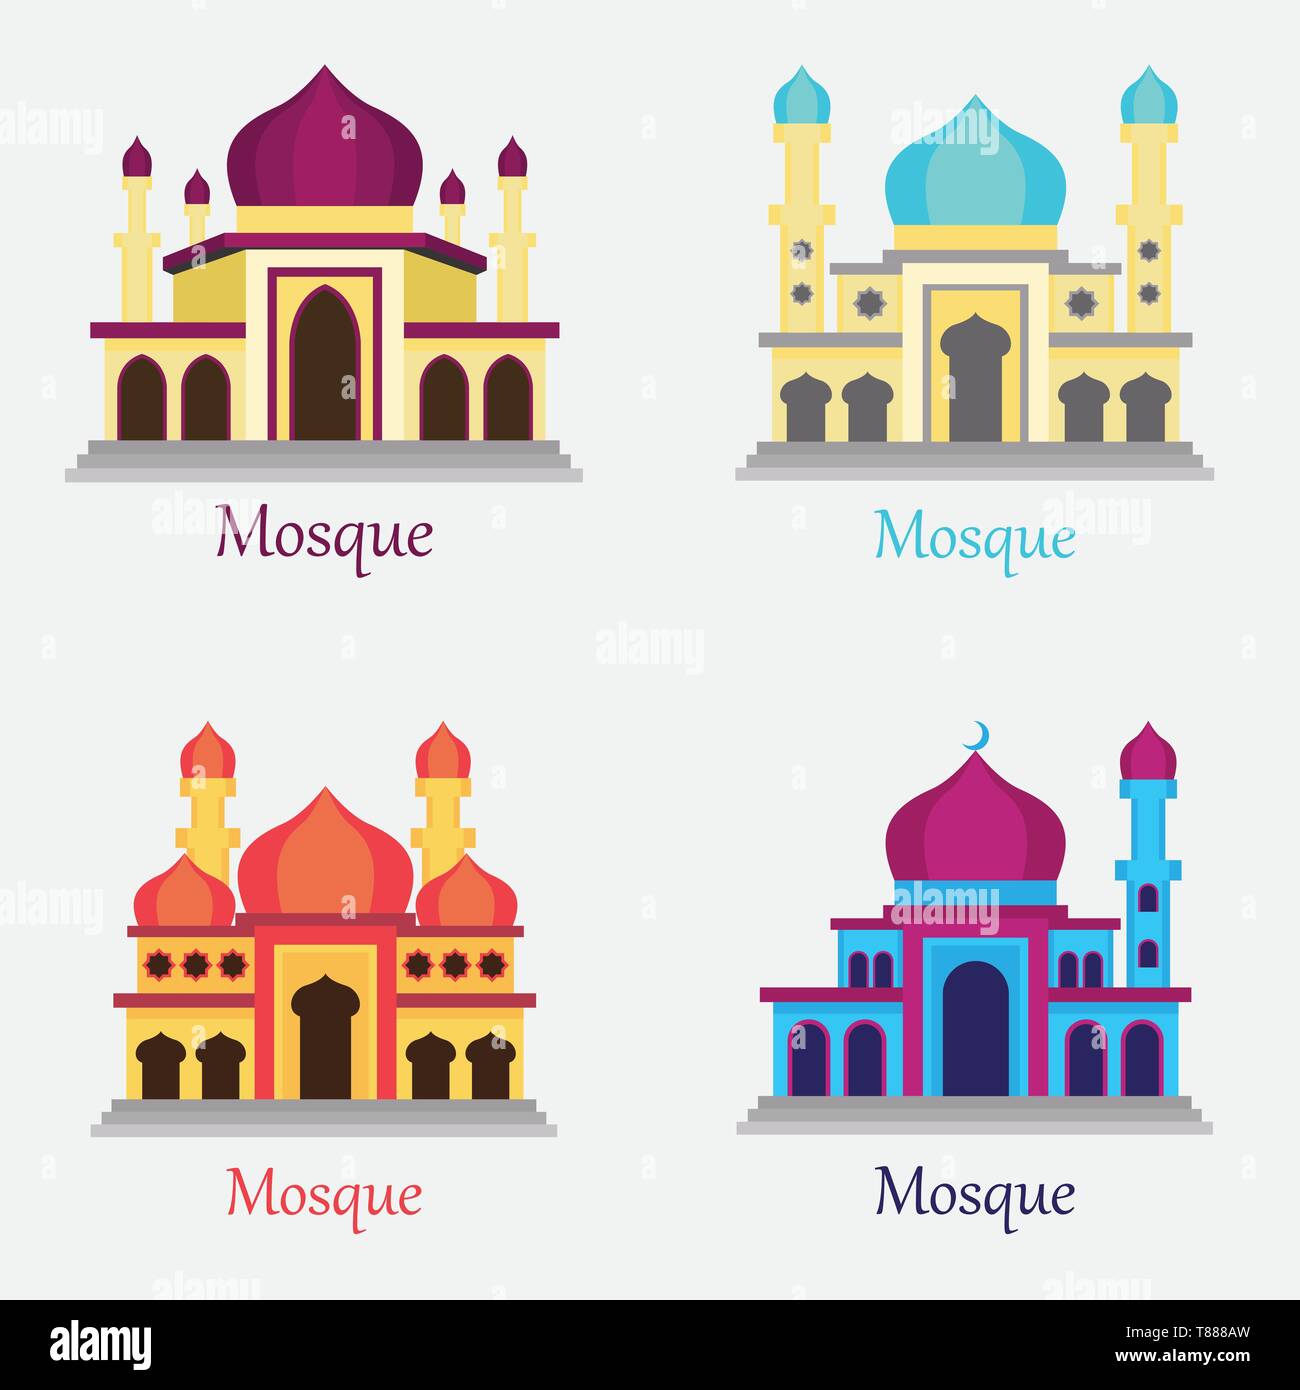 Mosque Masjid for Muslim pray icon. vector illustration Stock Vector